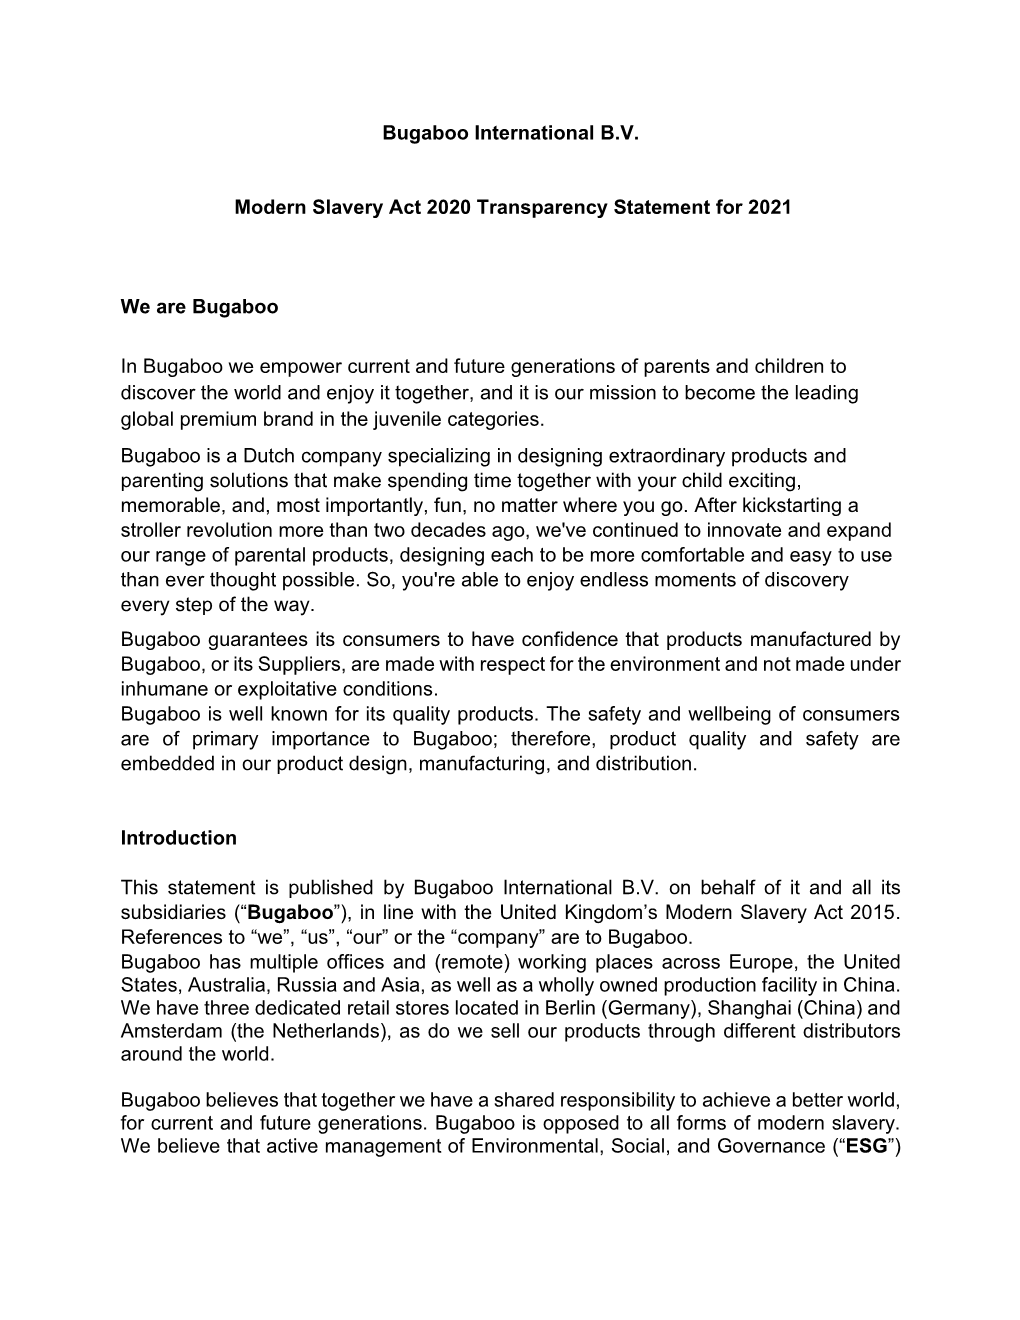 Bugaboo International B.V. Modern Slavery Act 2020 Transparency